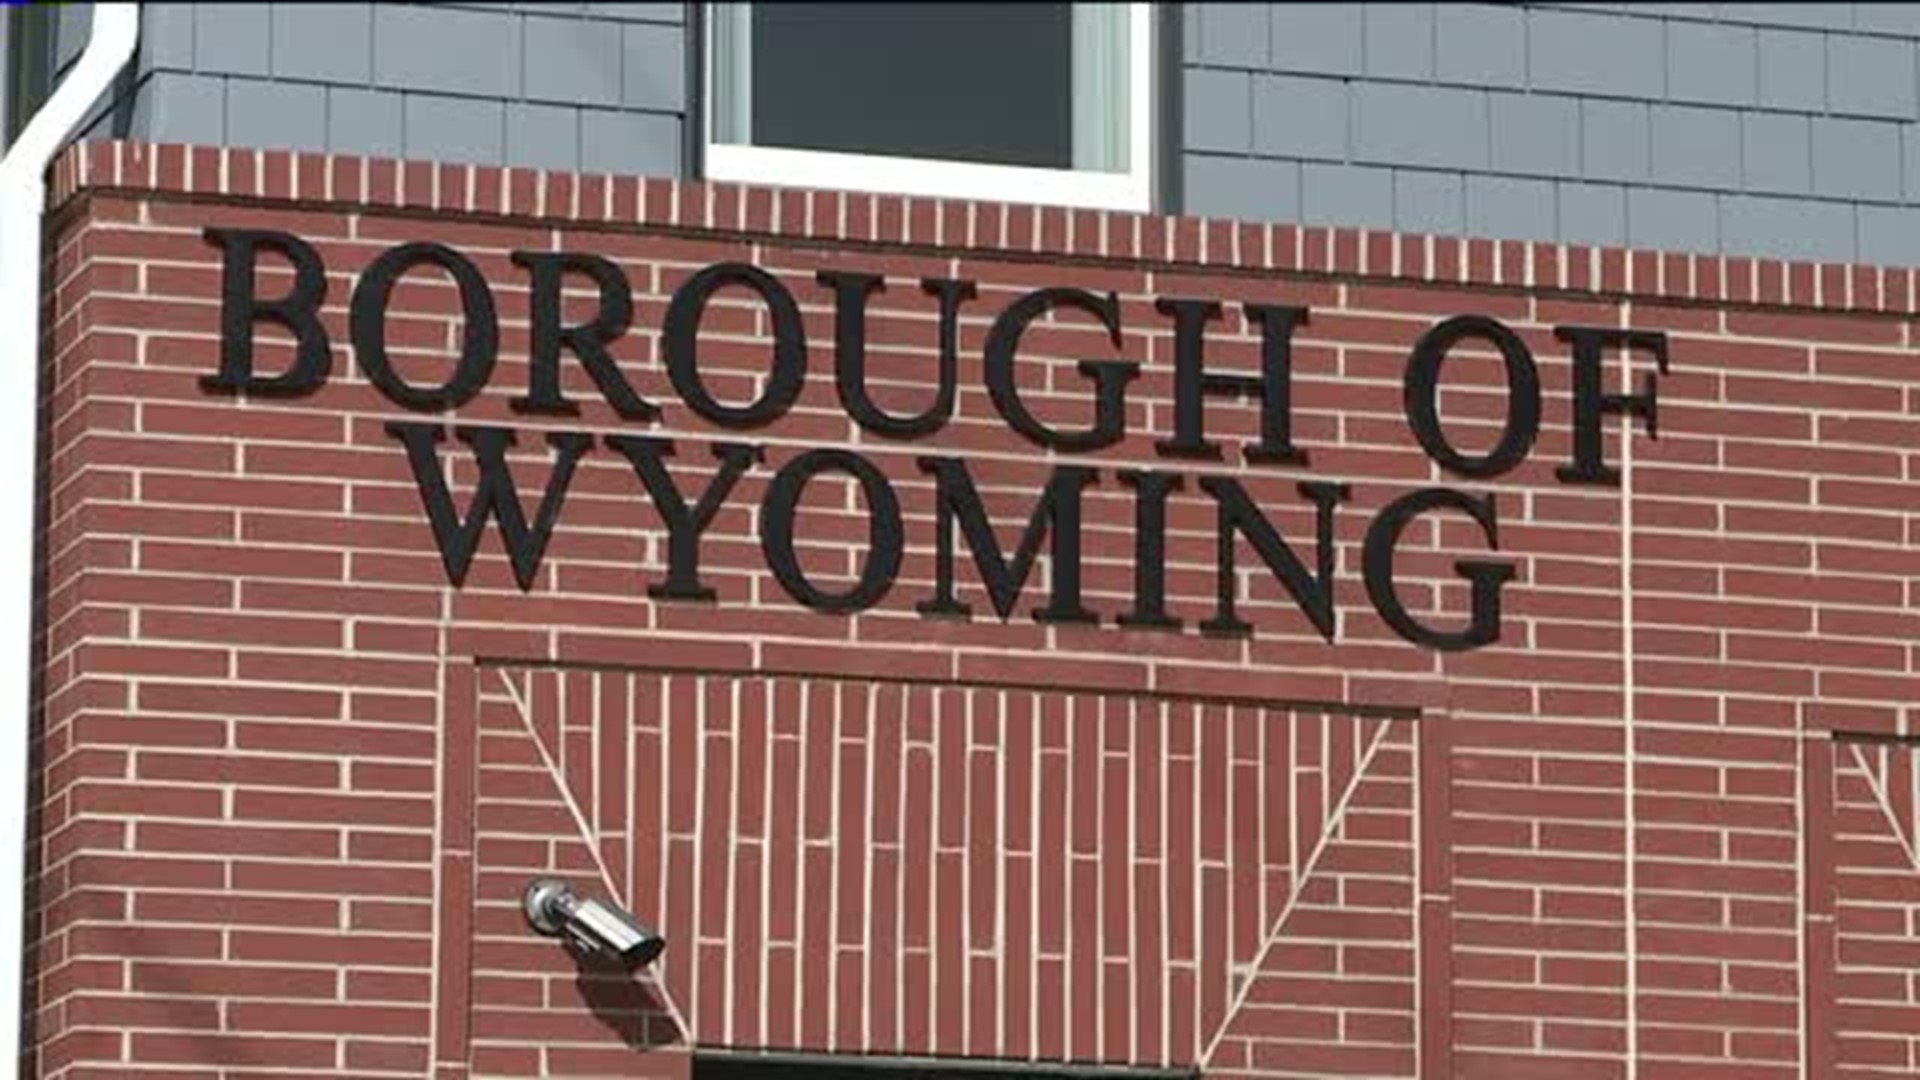 Despite Investigation, Wyoming Borough Manager Still on the Job